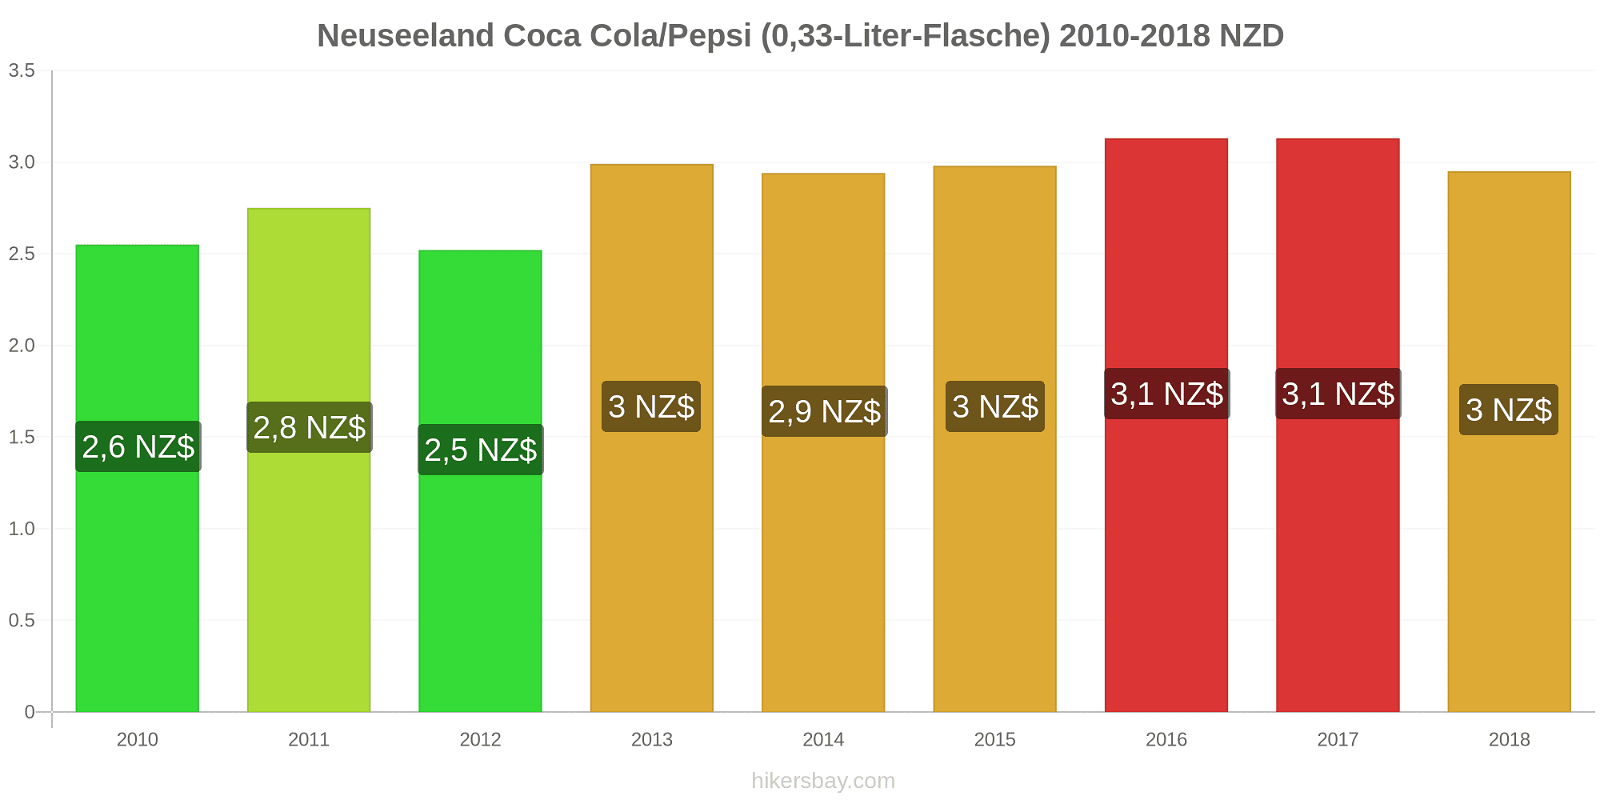 Neuseeland Preisänderungen Coke/Pepsi (0.33-Liter-Flasche) hikersbay.com